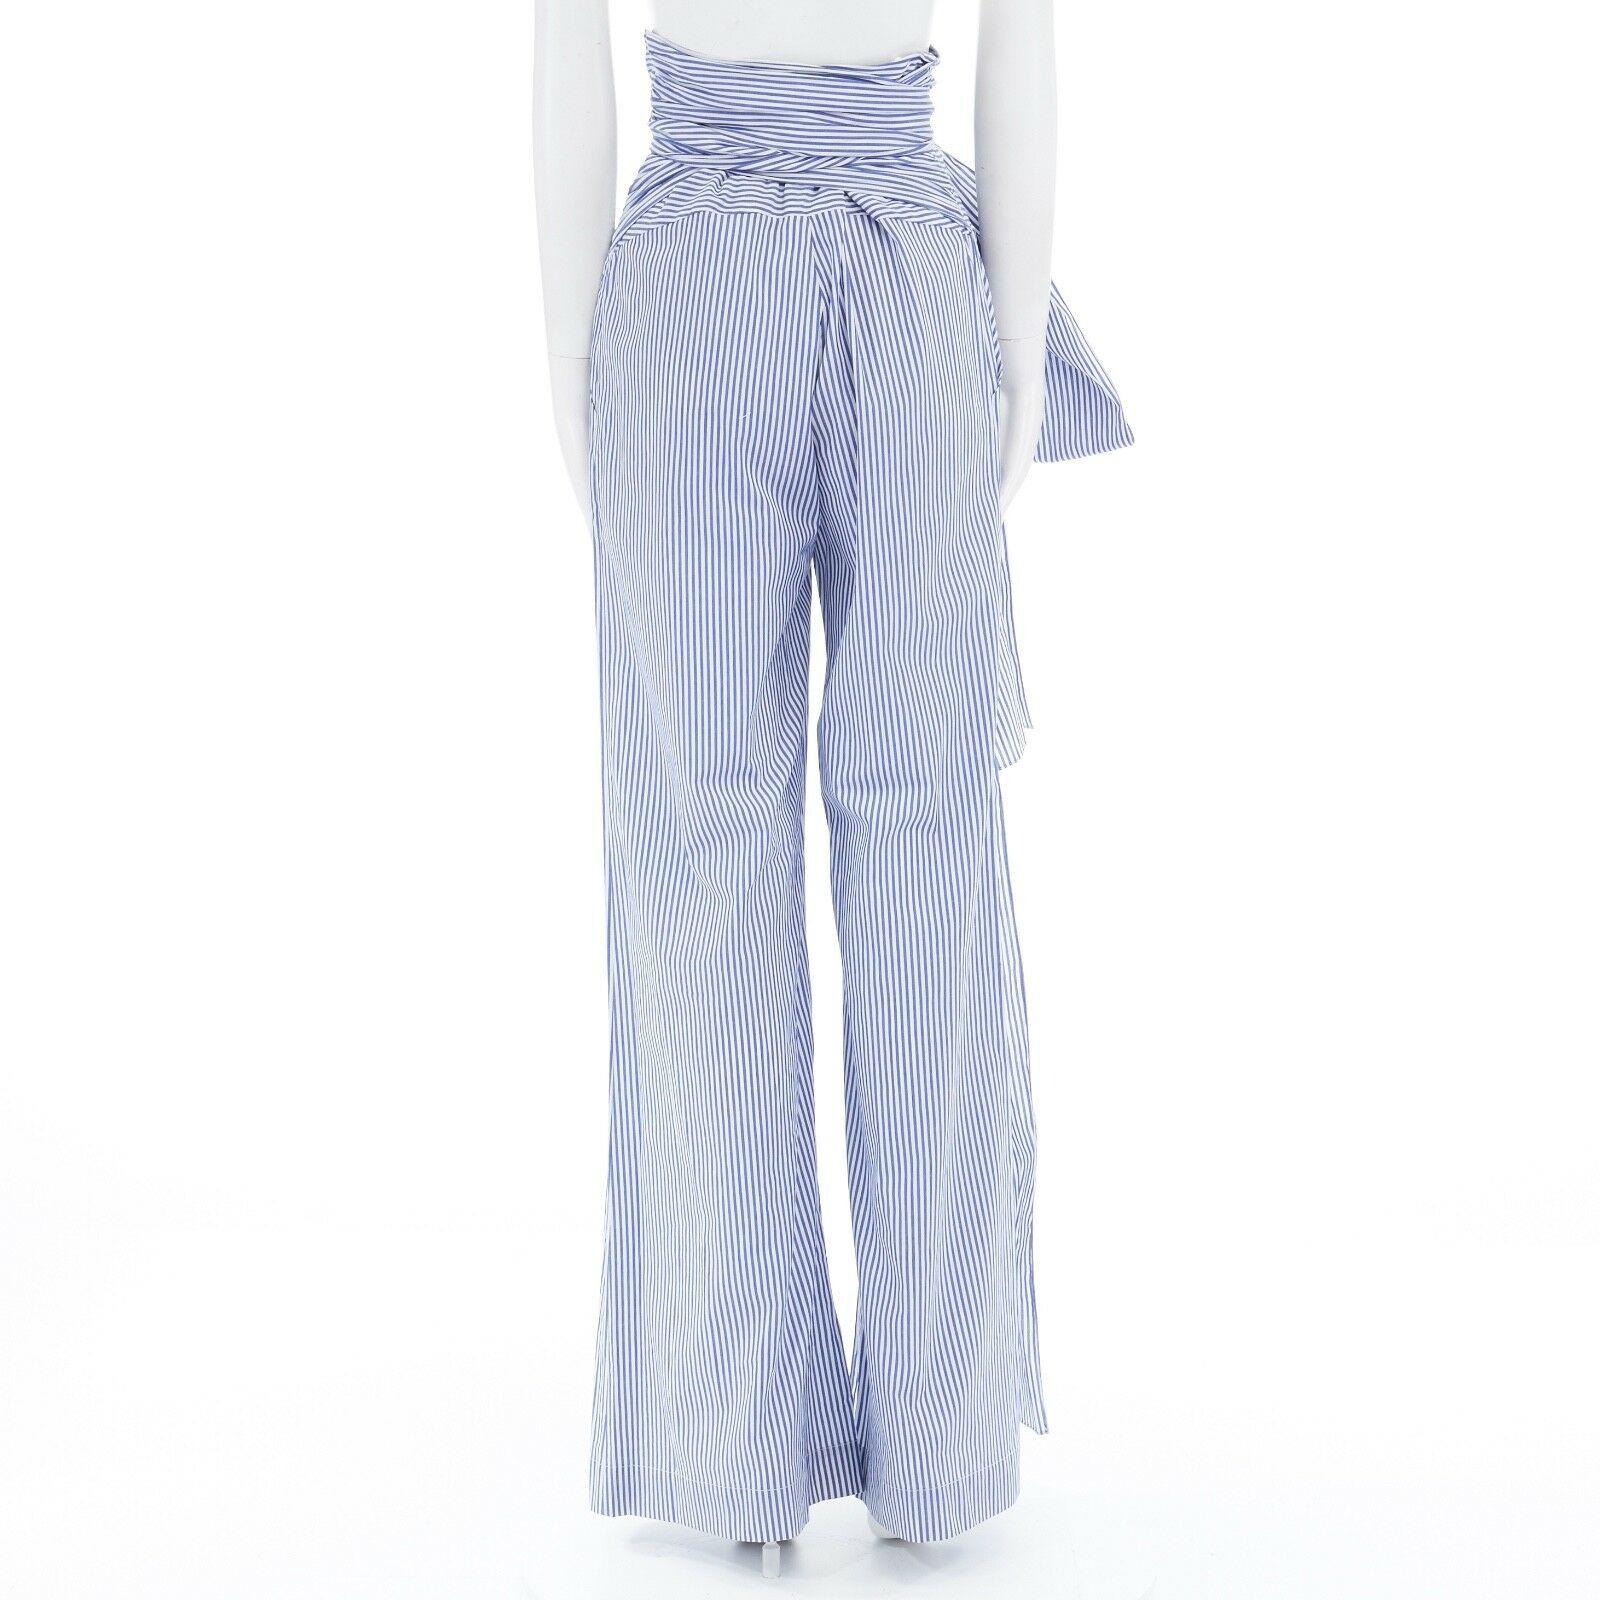 new ROSIE ASSOULIN AW16 blue white pinstripe cotton highwaist sash wide pant US6 1